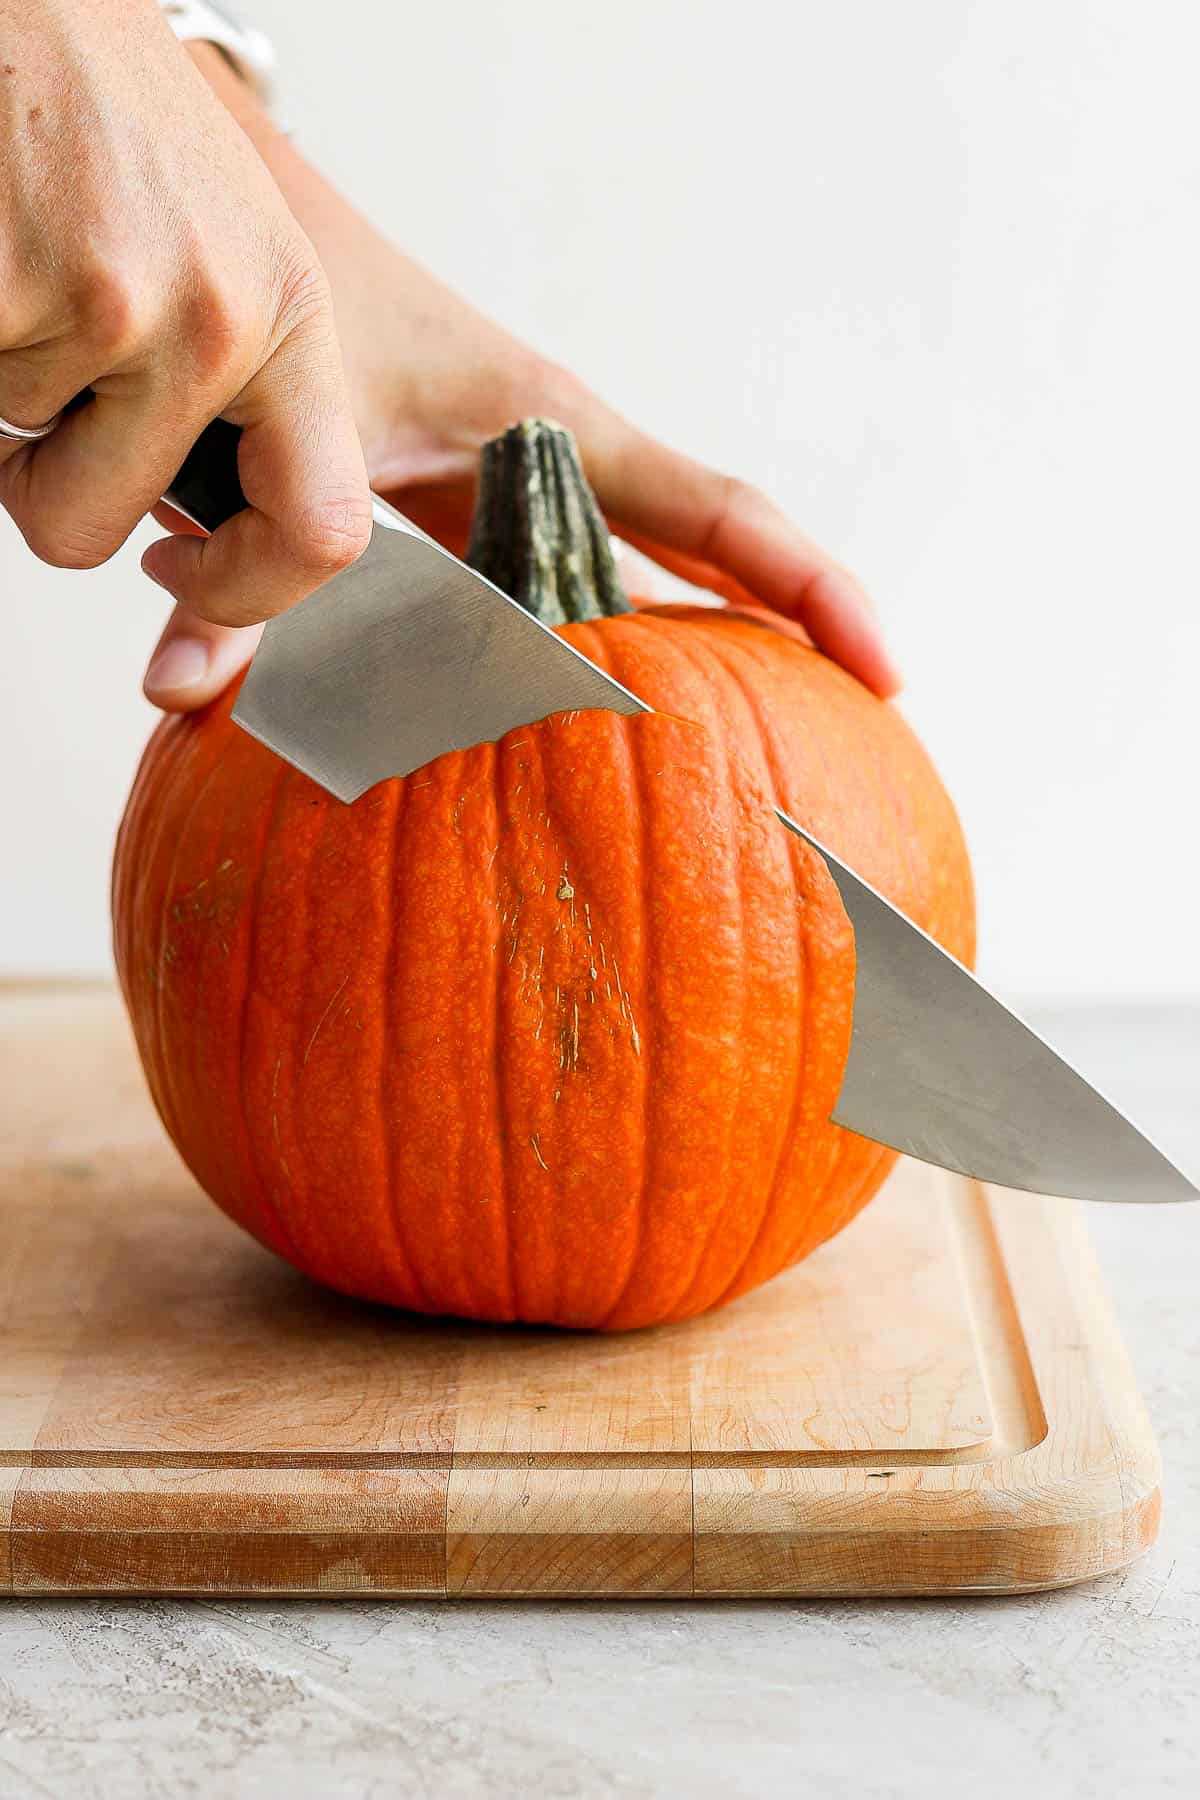 A sharp knife cutting a thin slice off the side of a pumpkin.